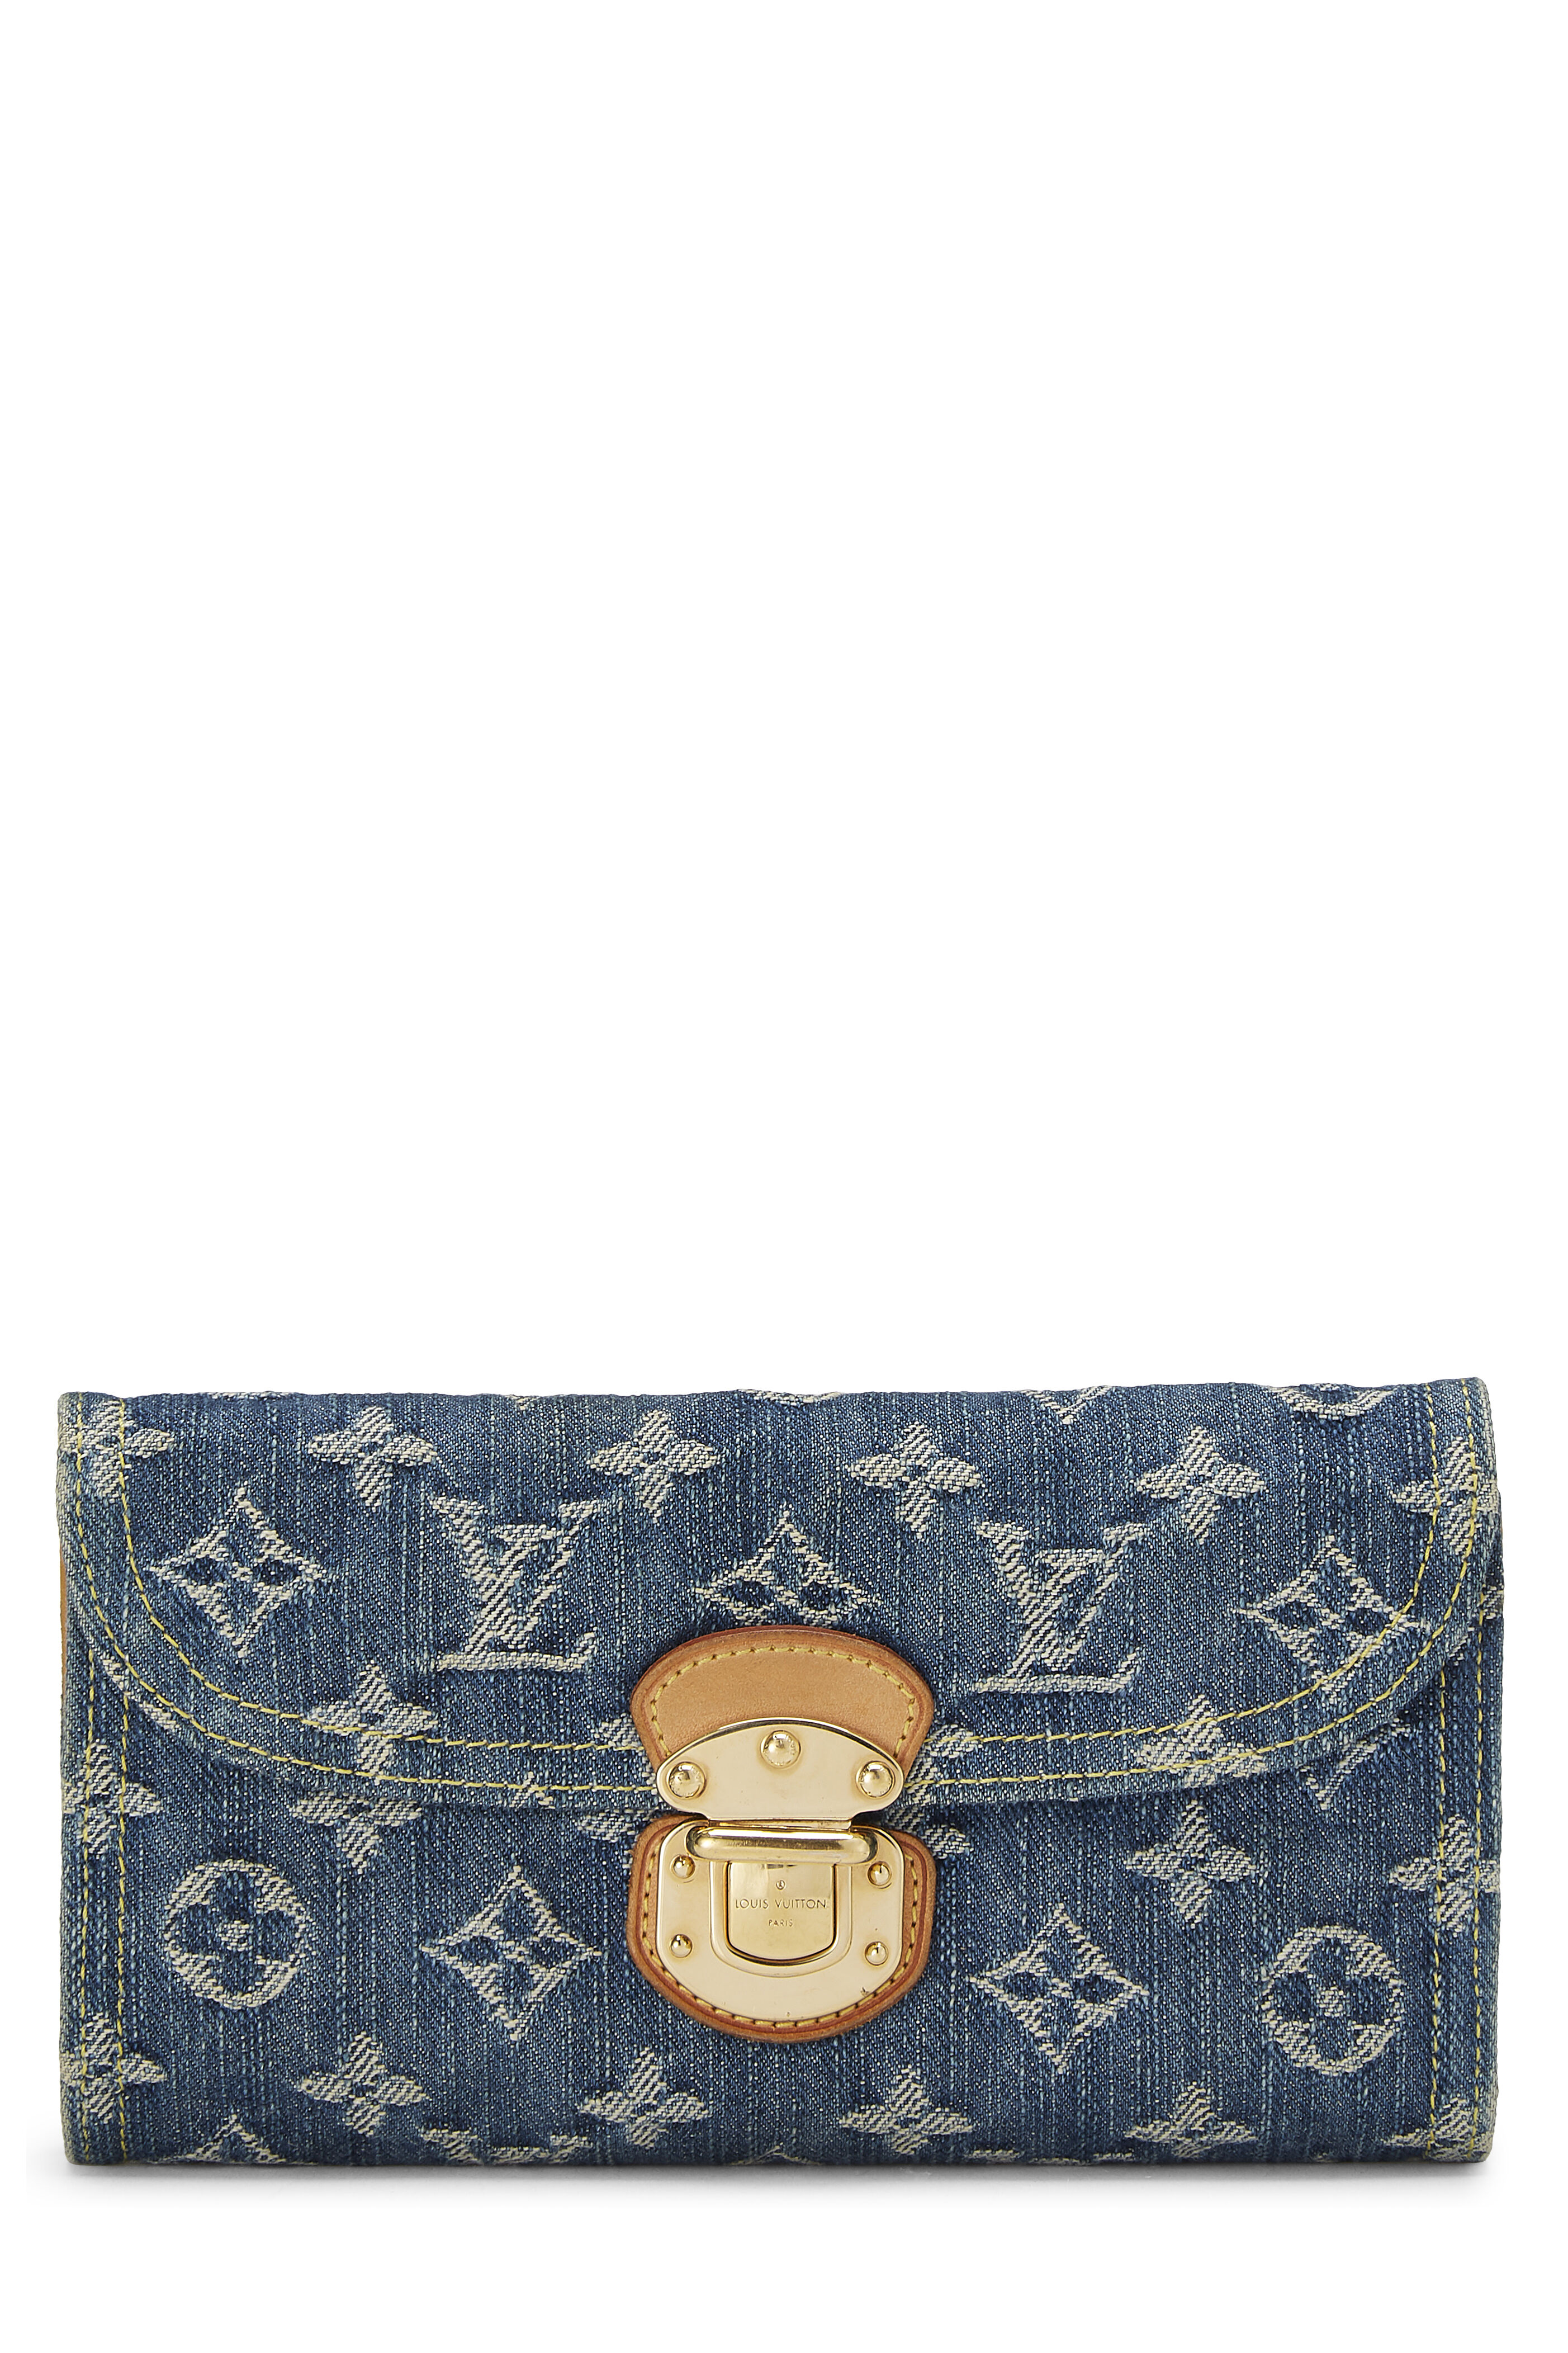 Louis Vuitton Blue Monogram Denim Flat Shopper QJBAVBECBB012